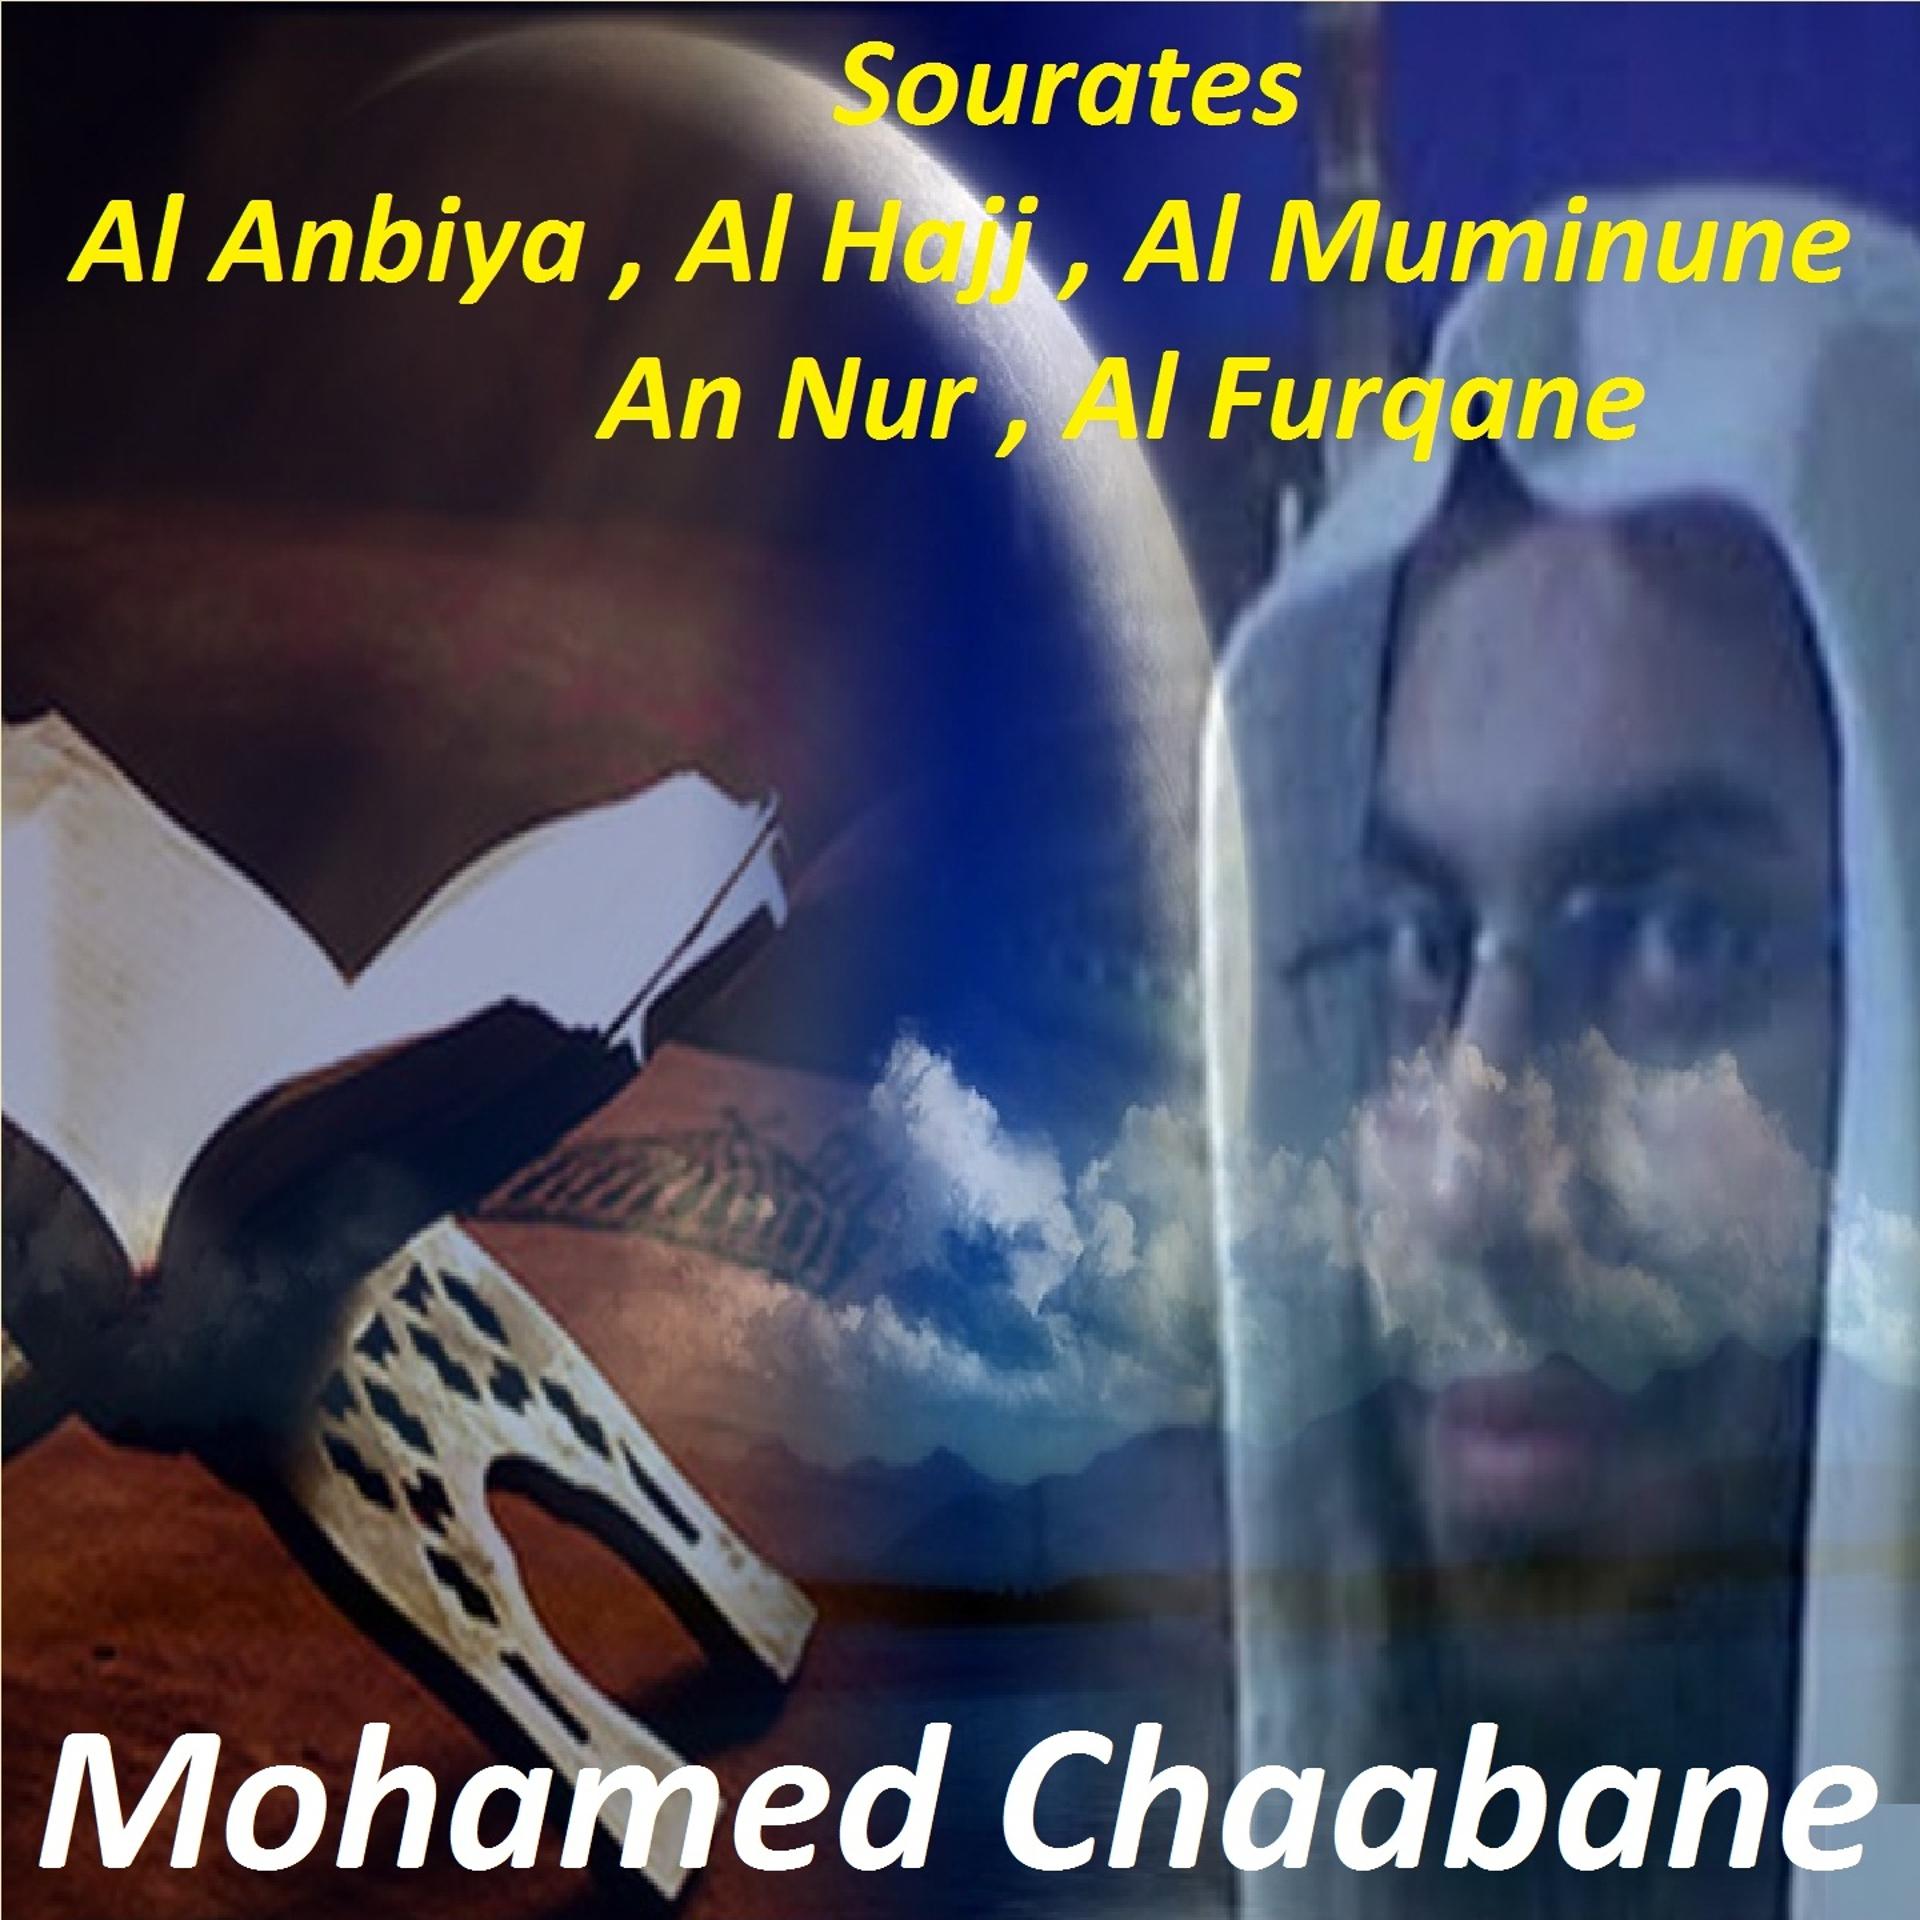 Постер альбома Sourates Al Anbiya, Al Hajj, Al Muminune, An Nur, Al Furqane